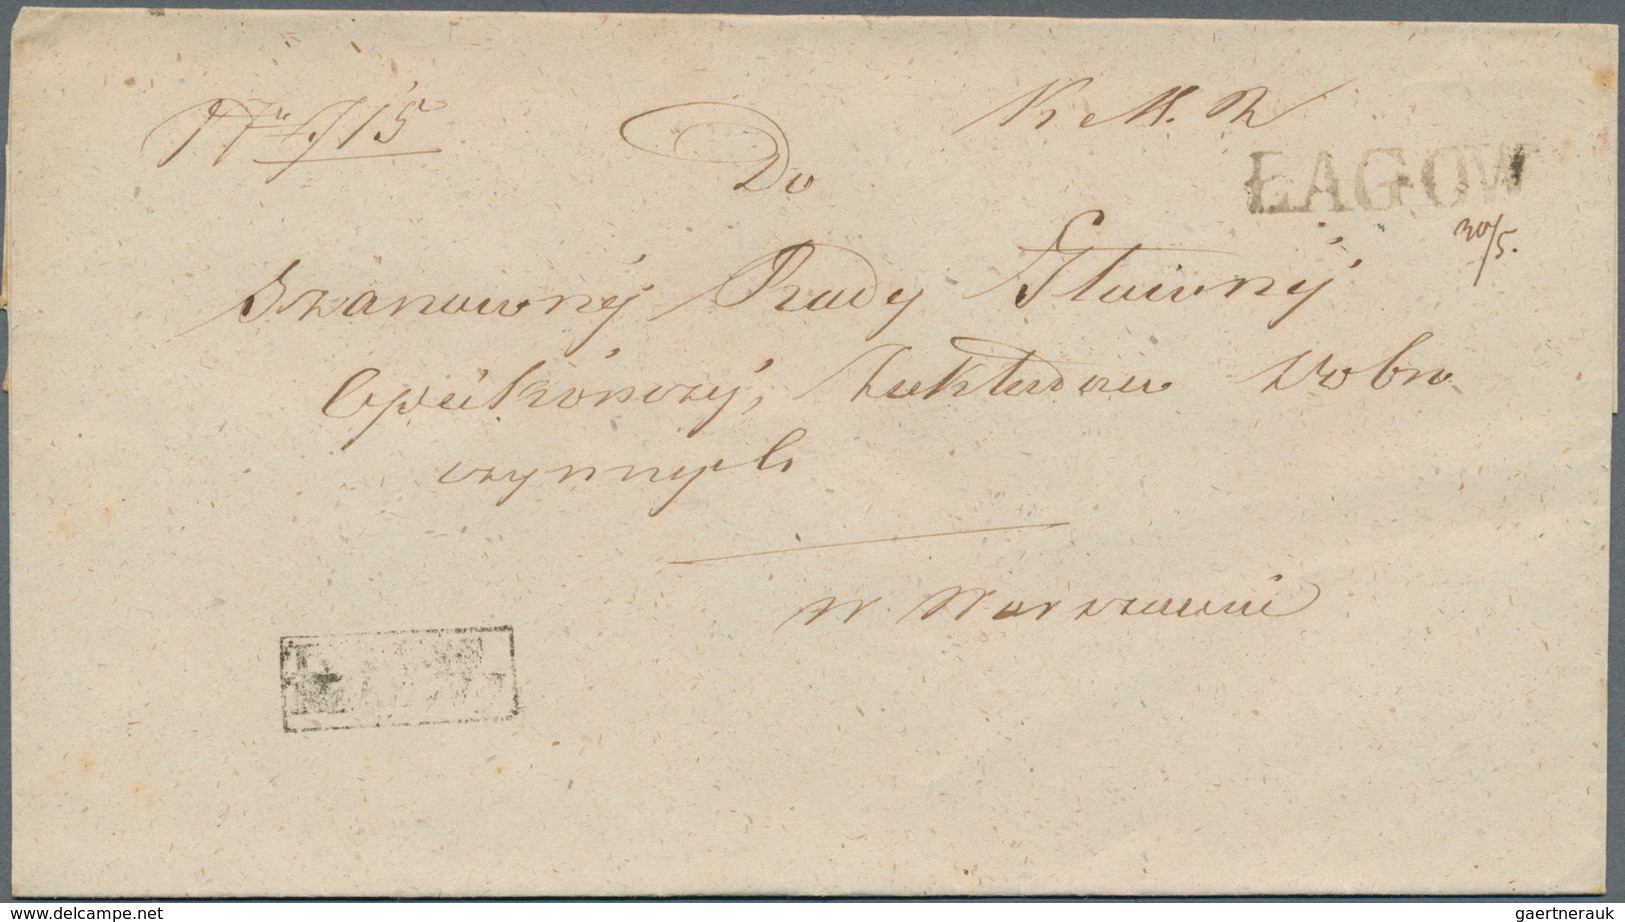 27701 Polen - Vorphilatelie: 1840/1860 ca., lot with ca.50 entire letters, comprising many different postm